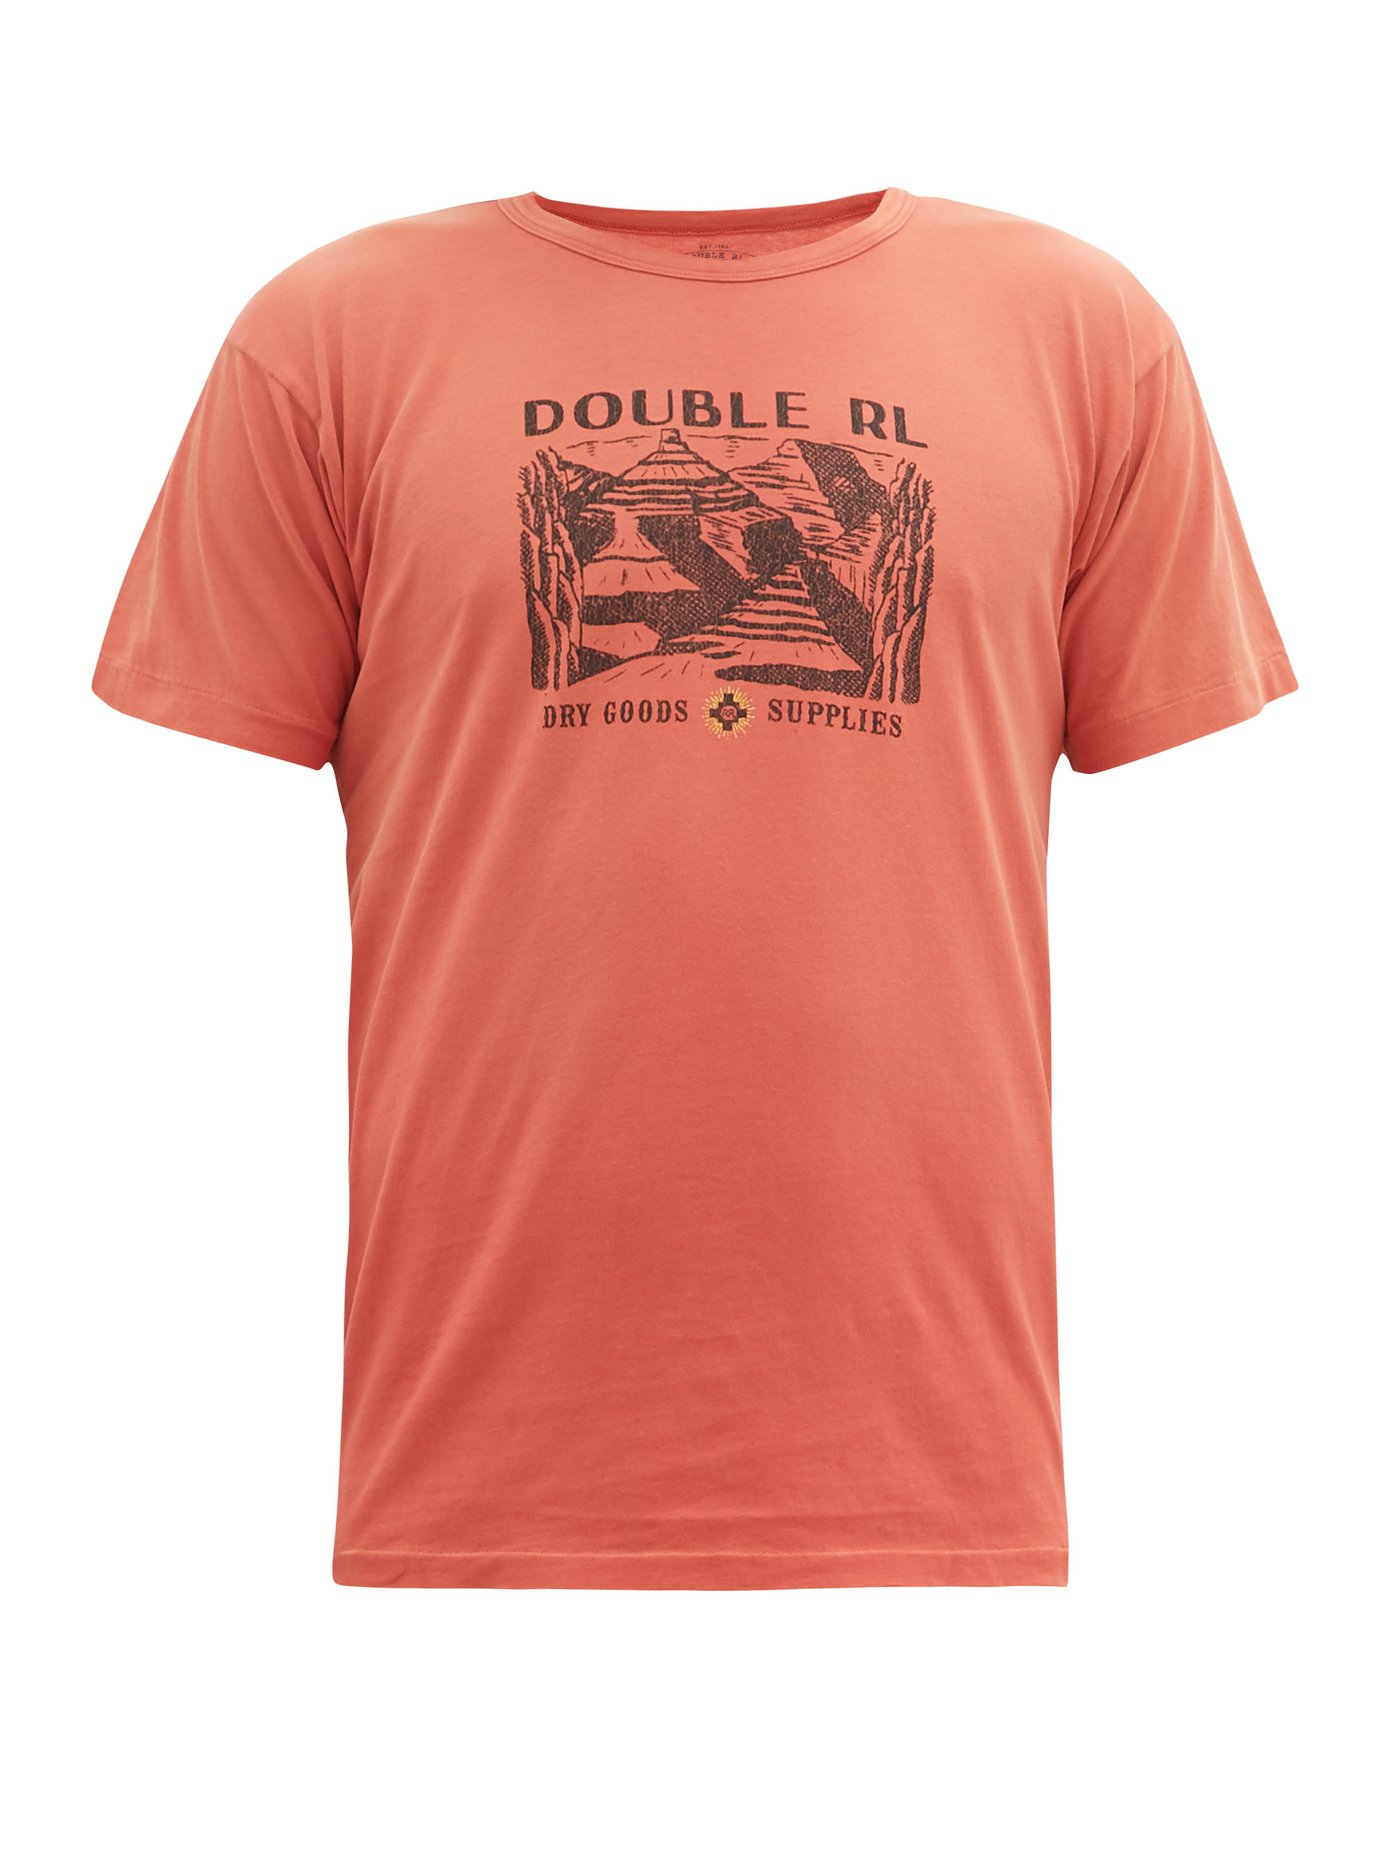 double rl t shirt